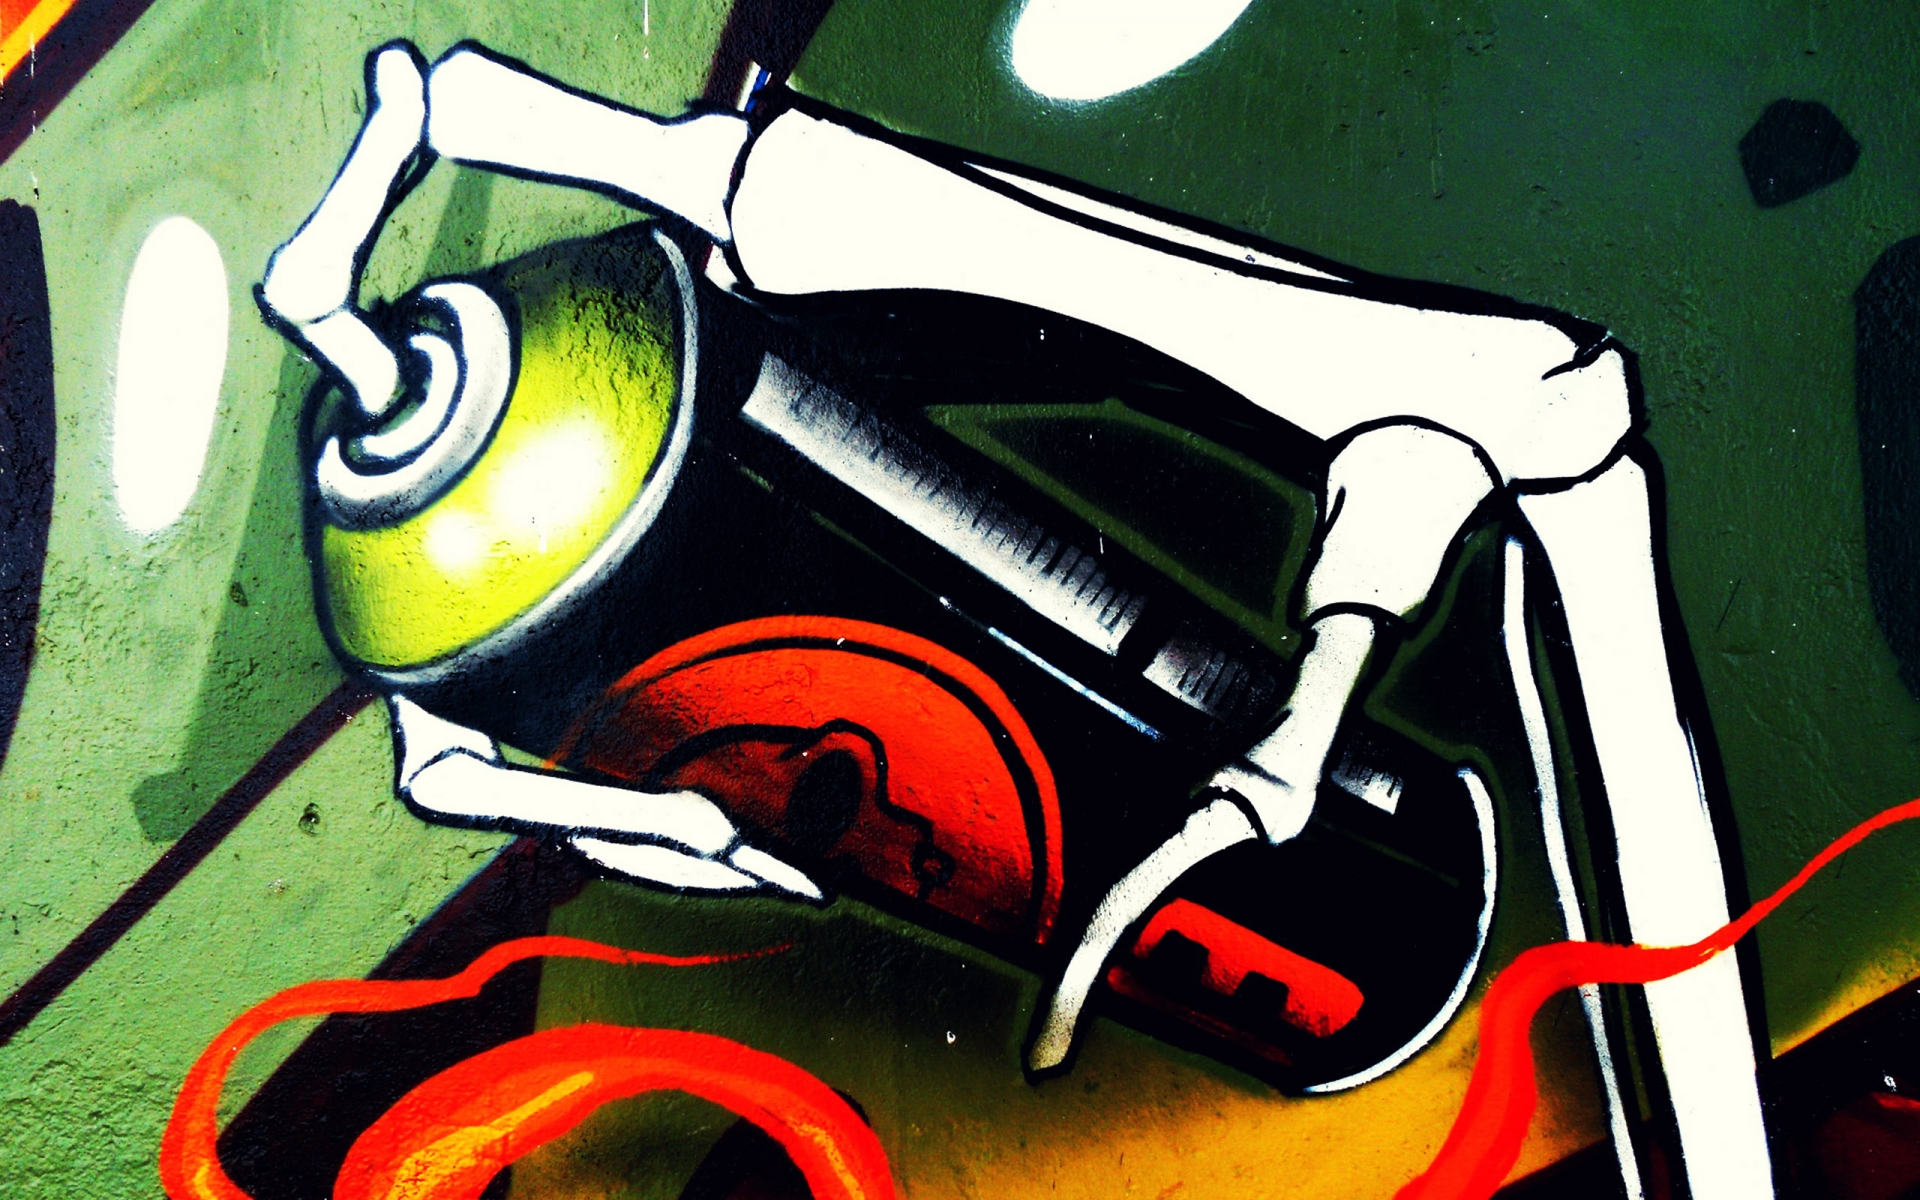 Graffiti wallpaper free download